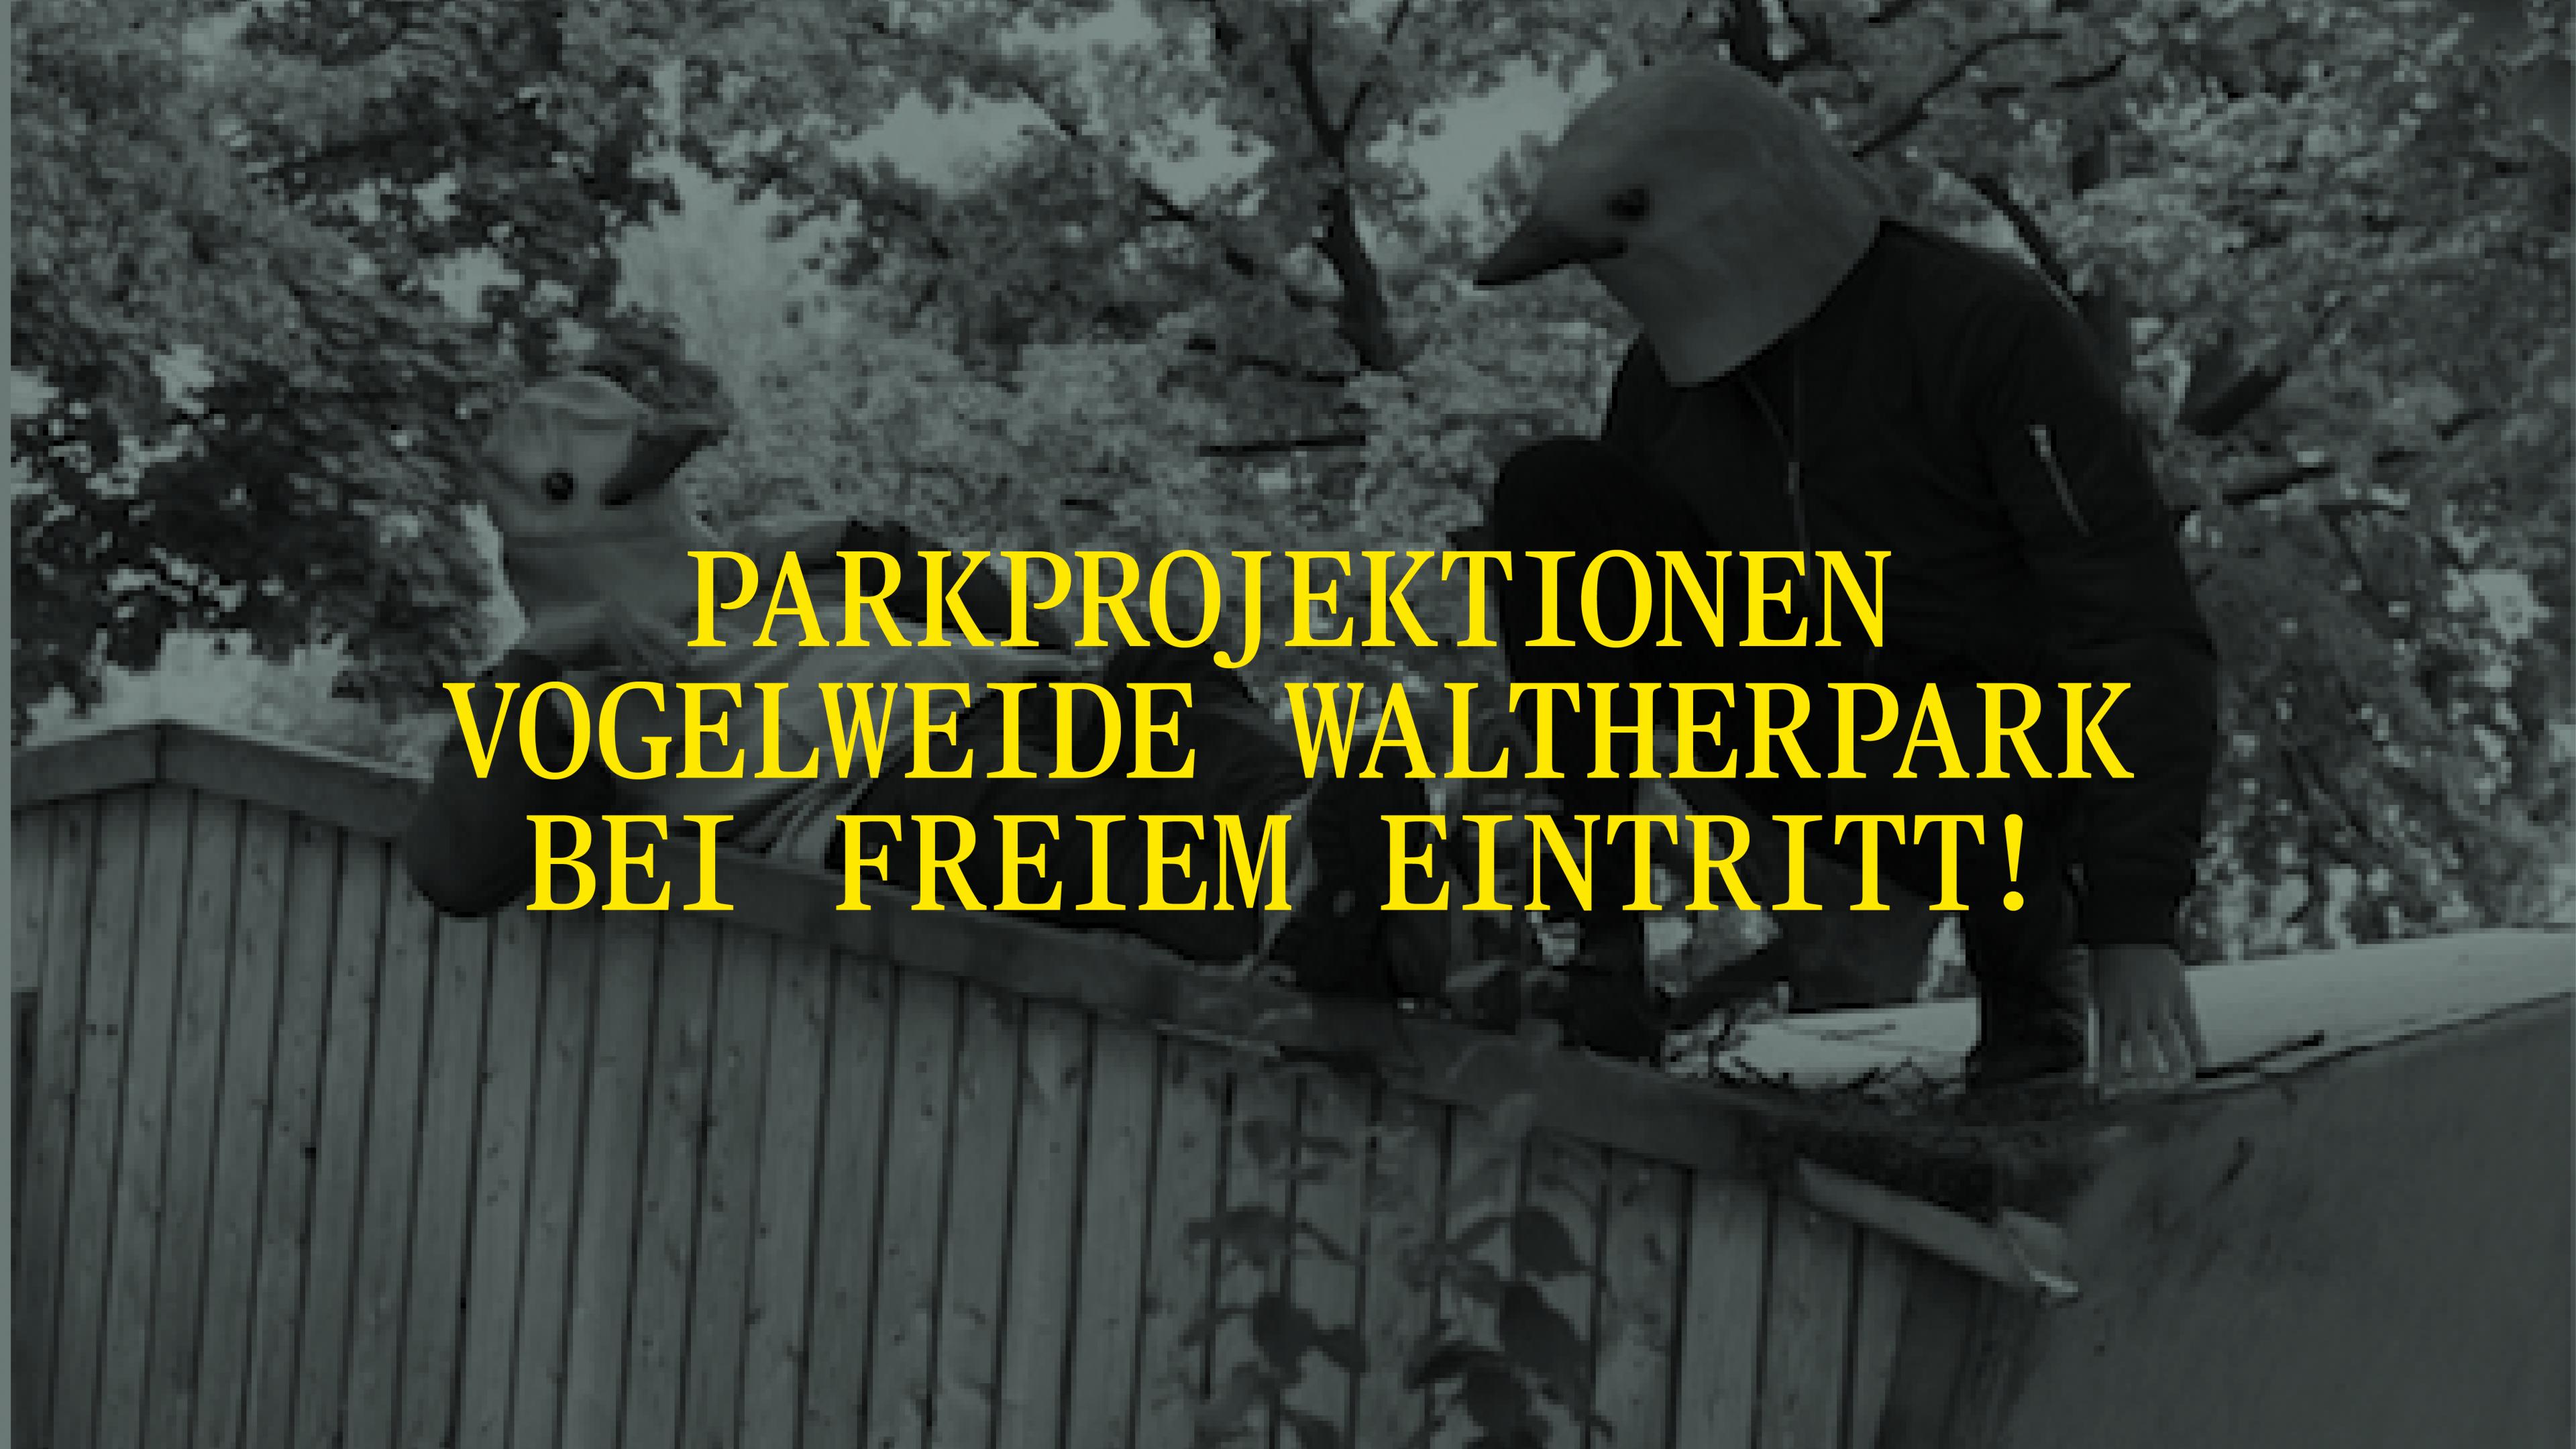 Parkprojektionen at Waltherpark